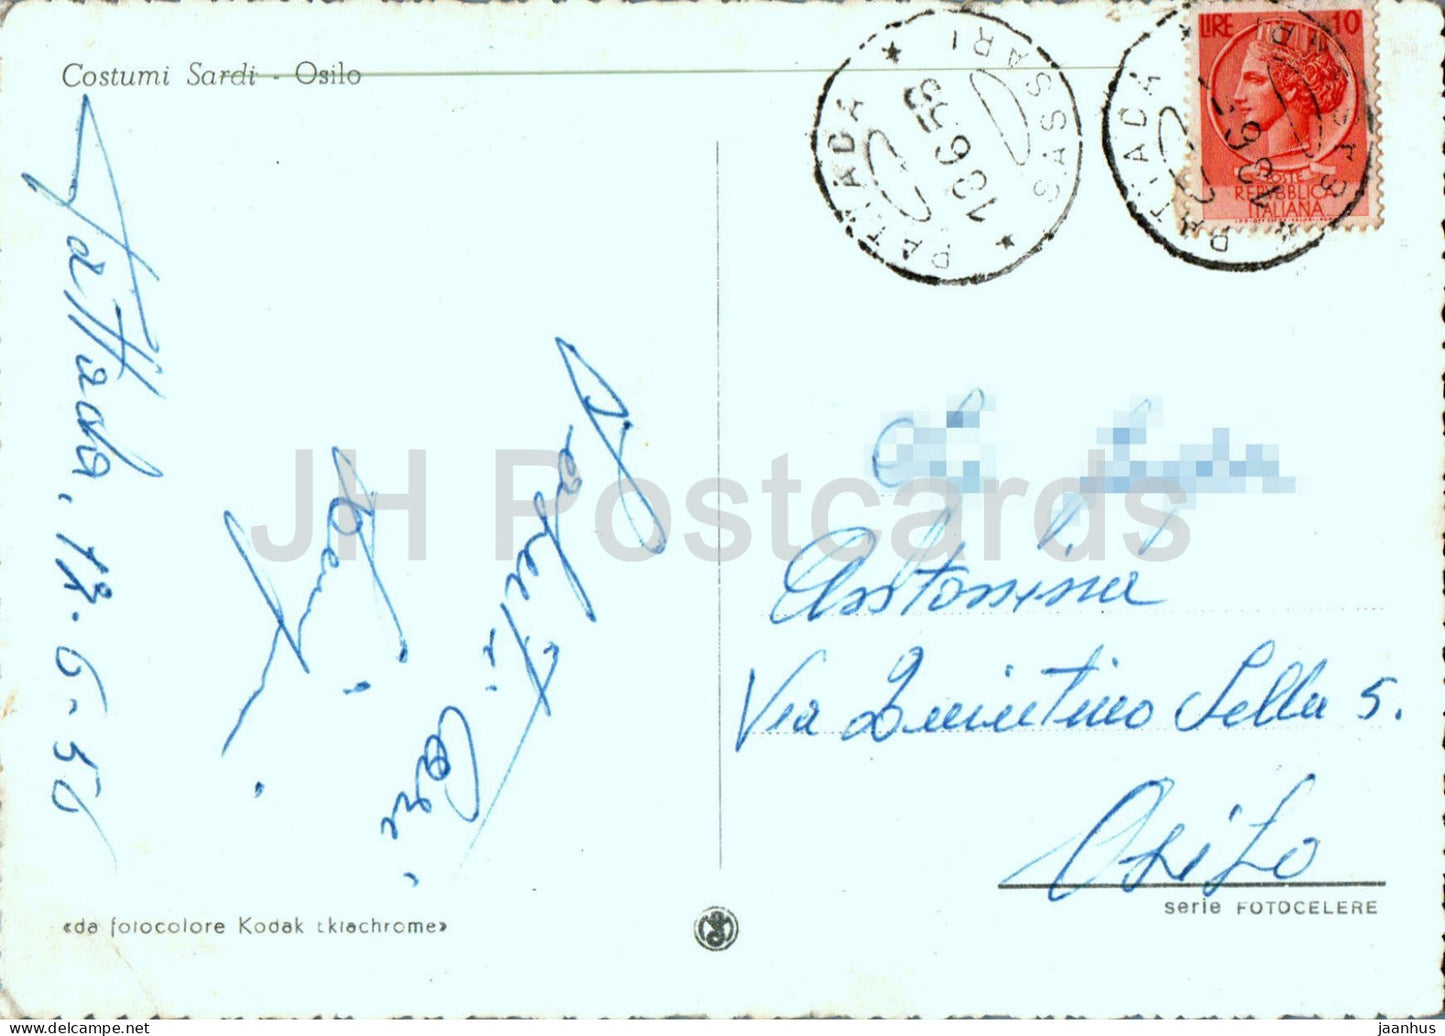 Costumi Sardi - Osilo - Volkstracht - alte Postkarte - 1956 - Italien - gebraucht 